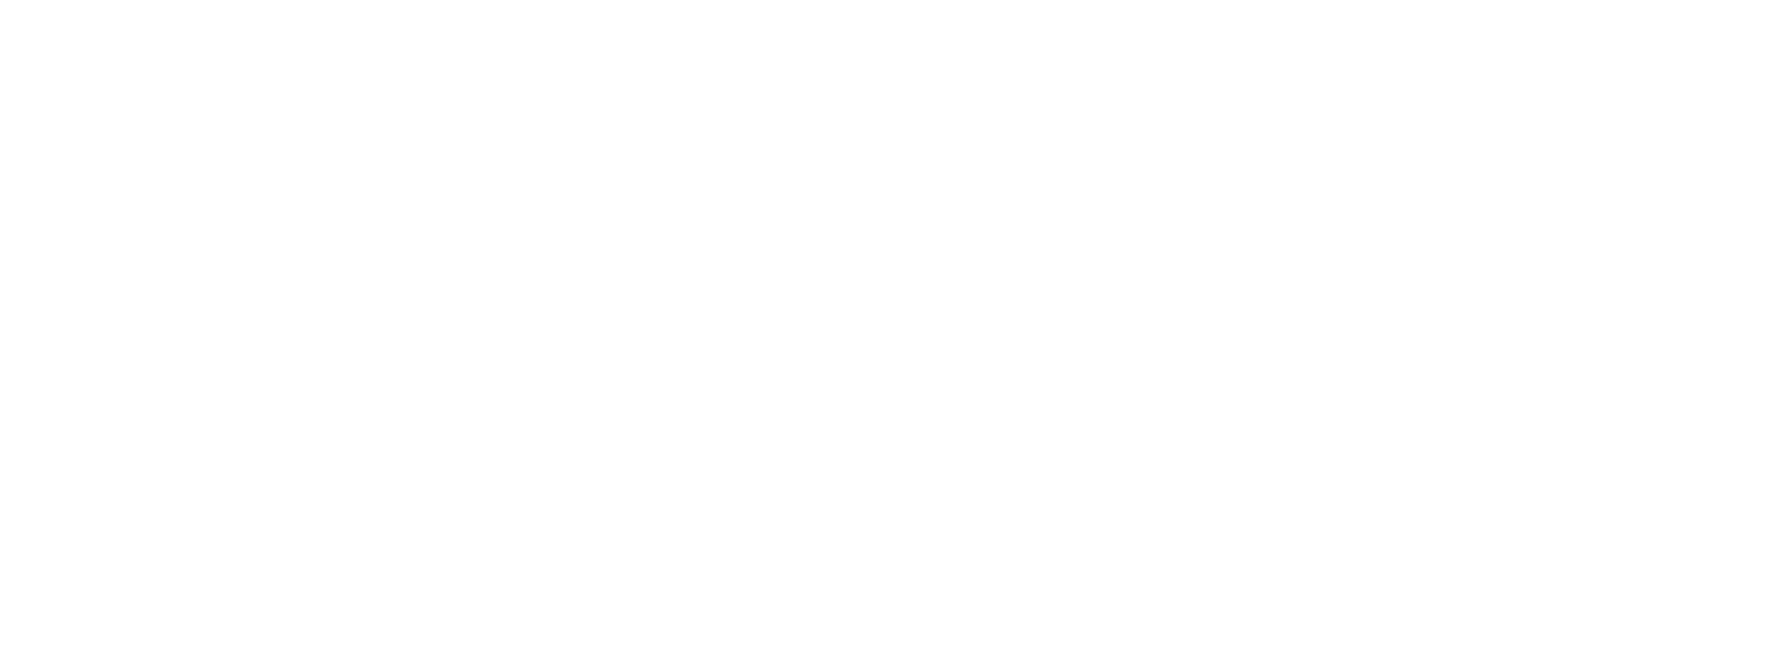 Digi-vortex_logo new